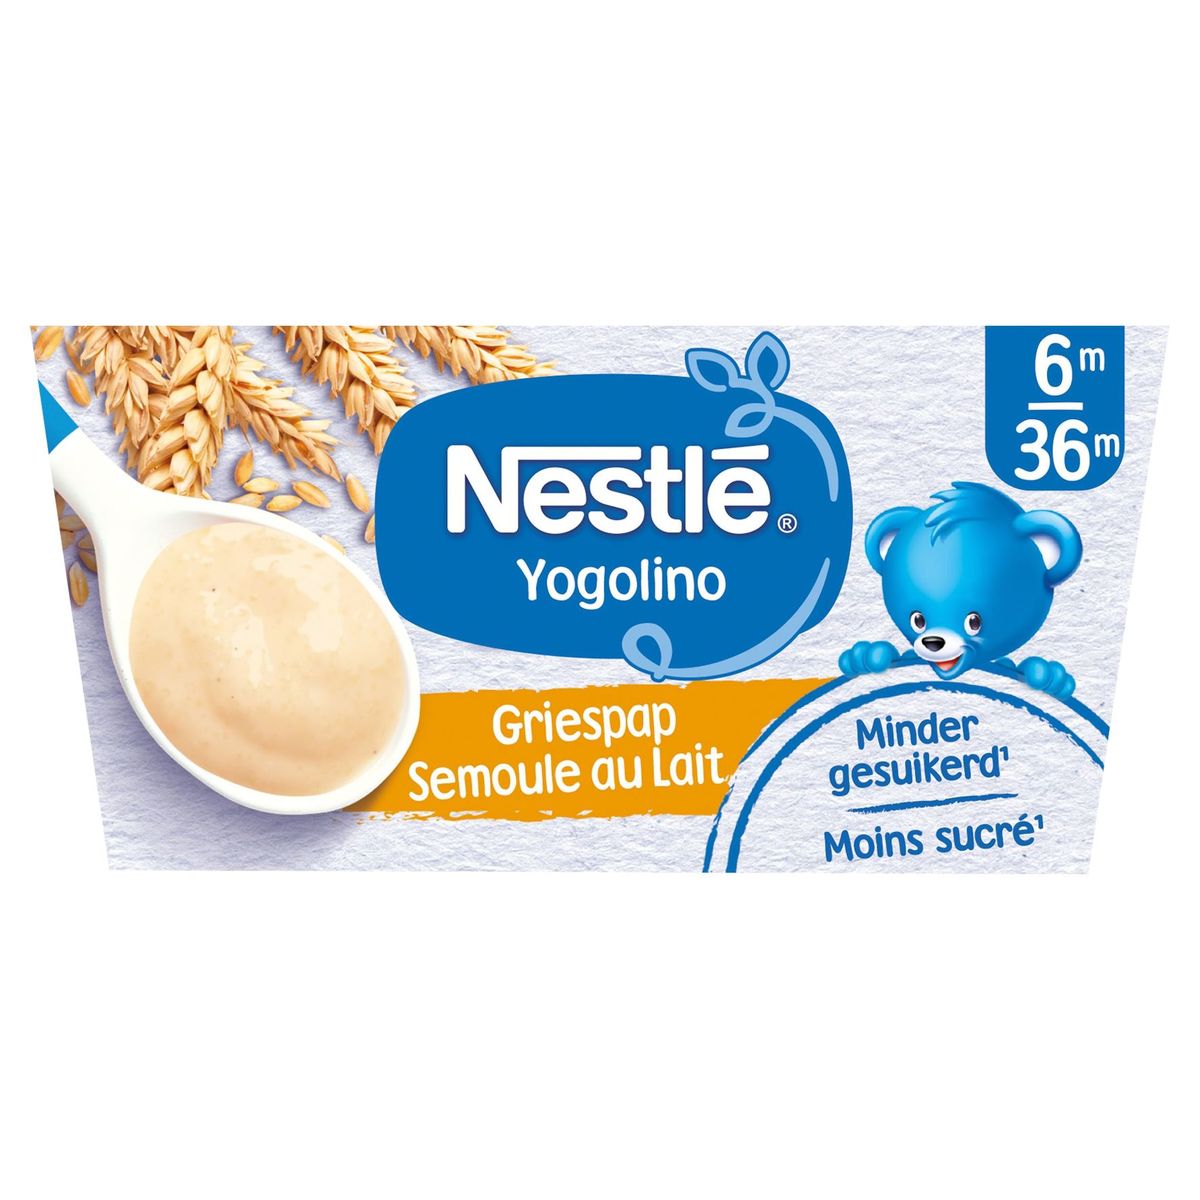 Nestlé Yogolino Melkdessert Griespap vanaf 6 maanden 4x100g